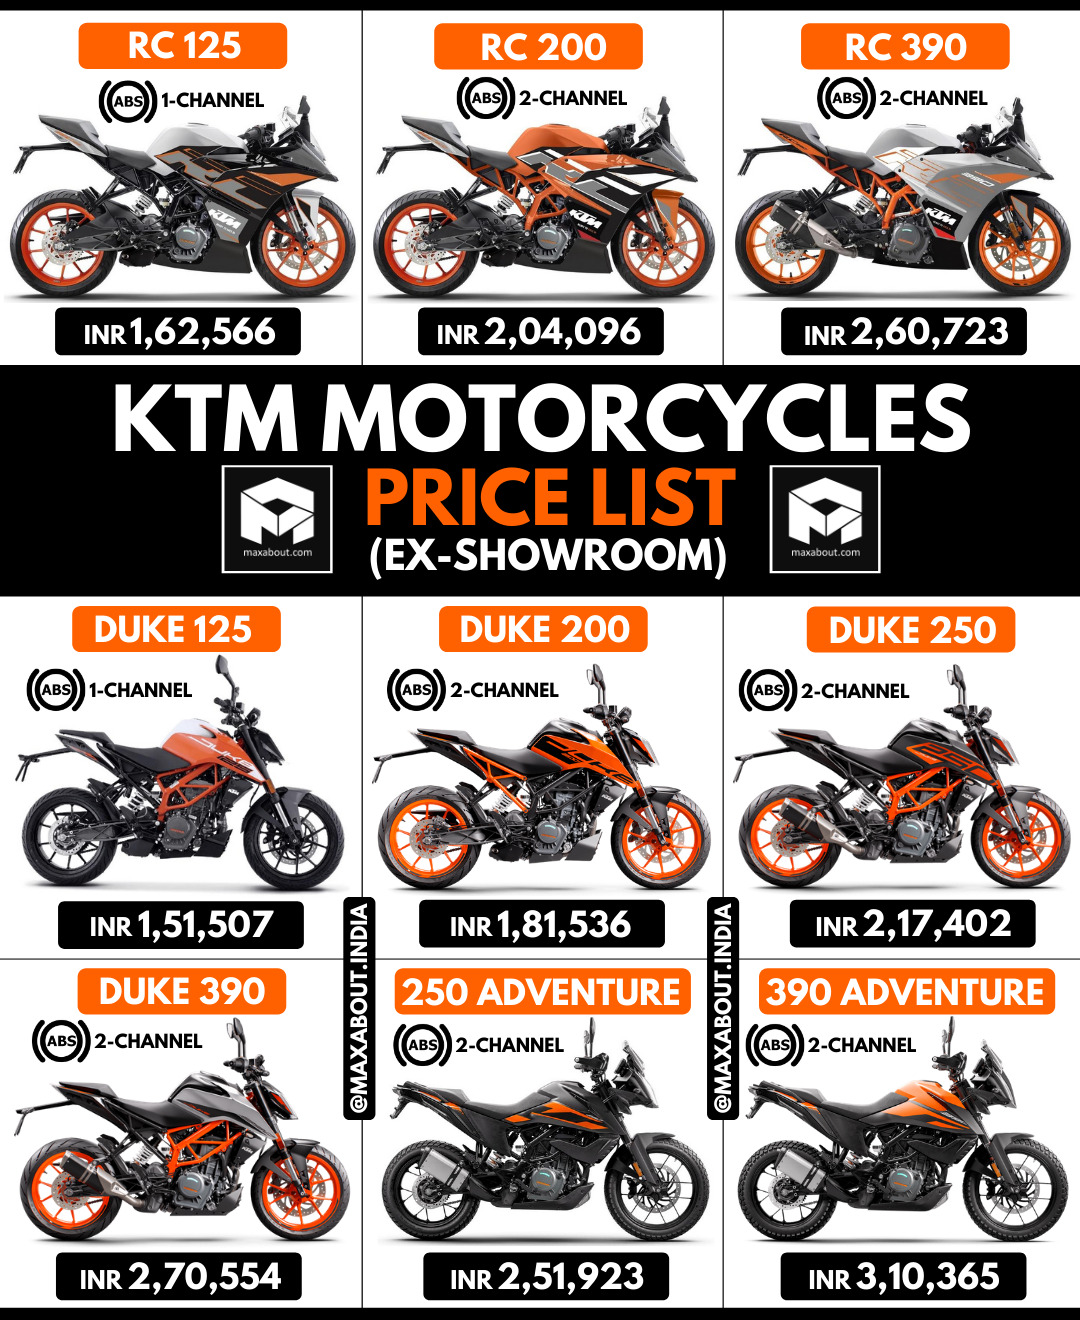 Latest KTM Motorcycles Ex-Showroom Price List (January 2021) image